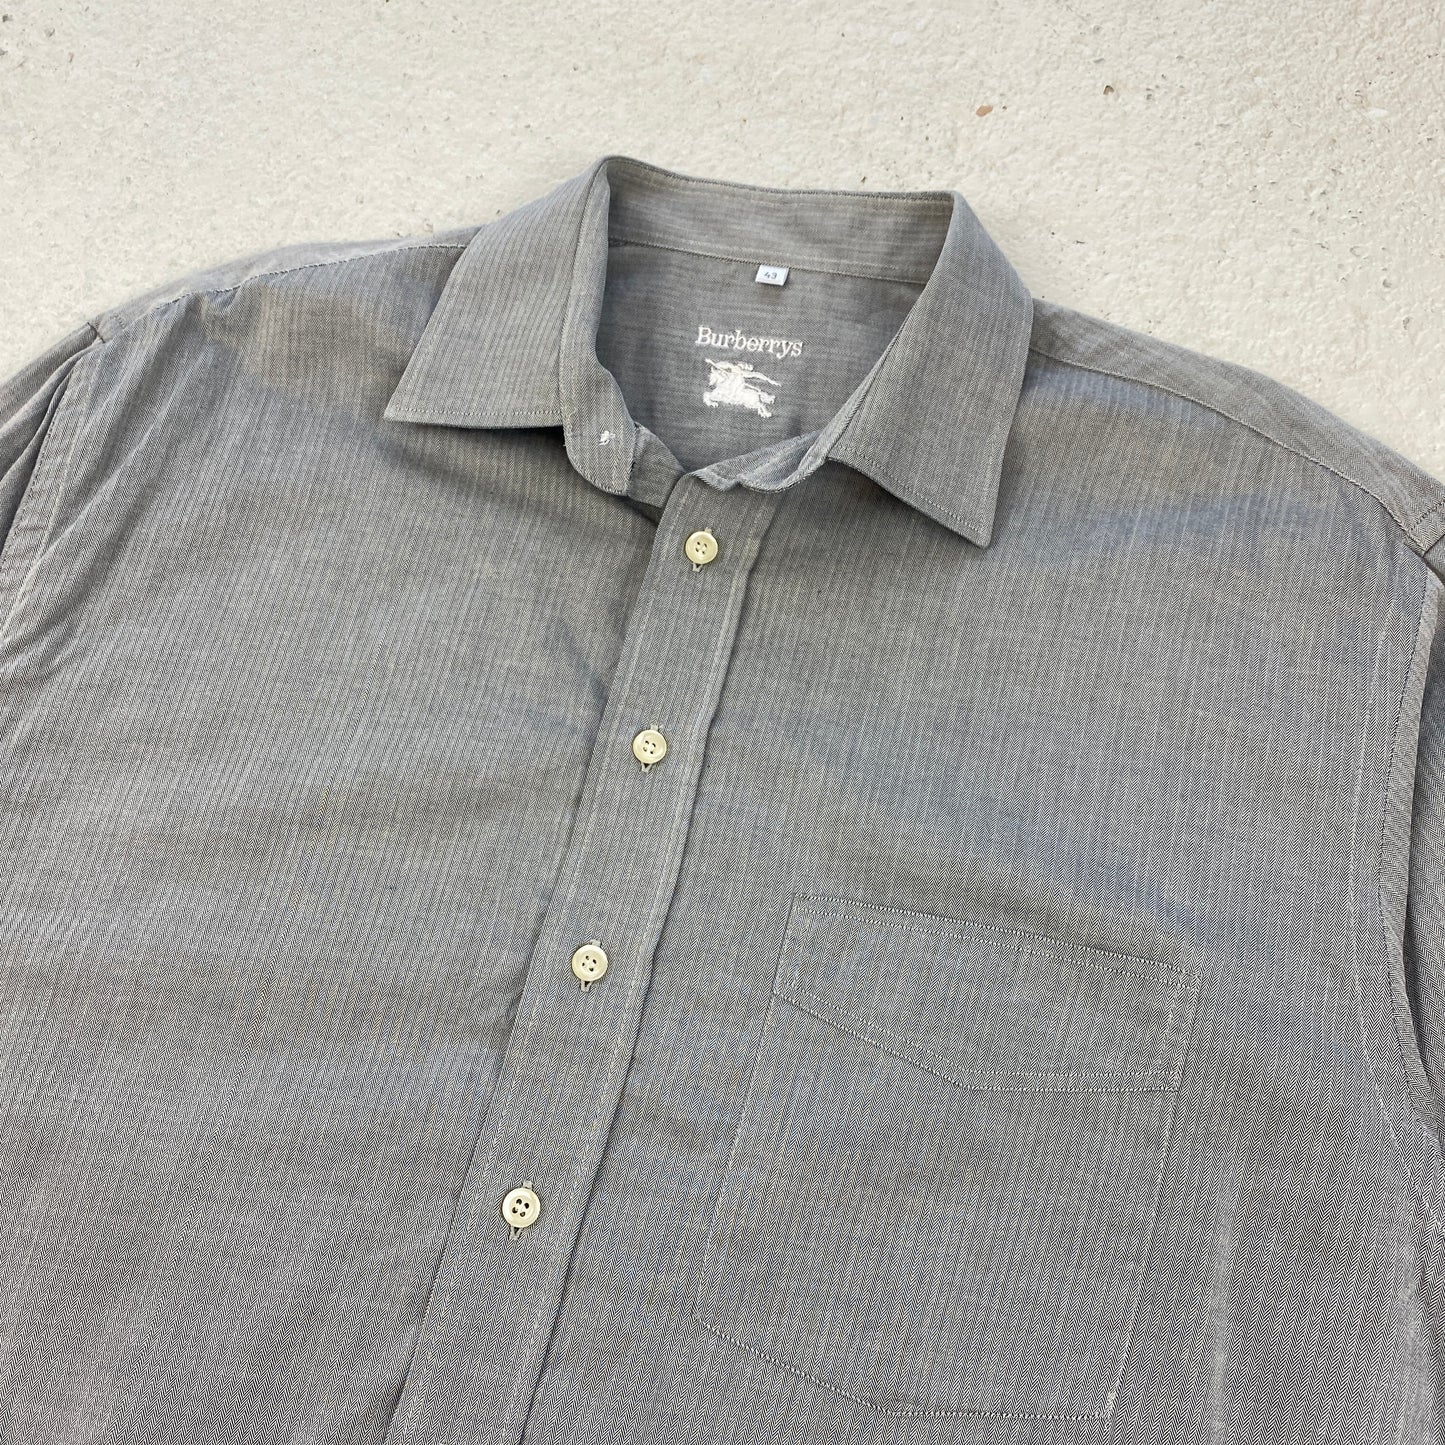 Burberry shirt (L-XL)